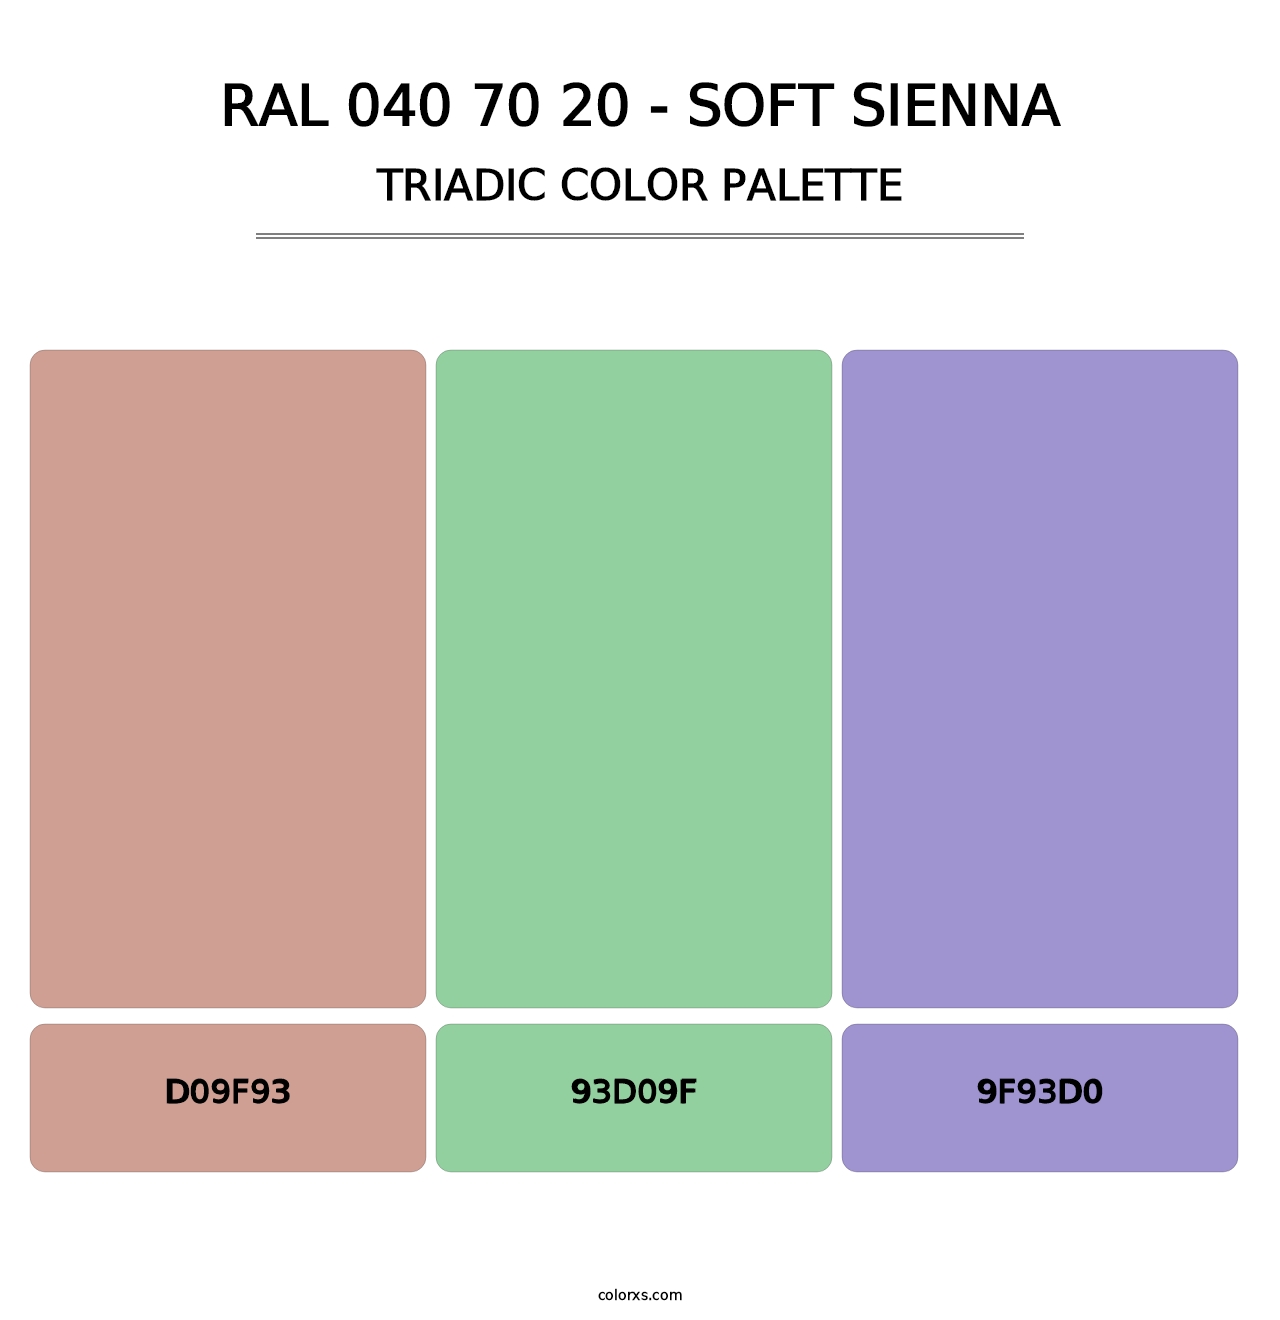 RAL 040 70 20 - Soft Sienna - Triadic Color Palette